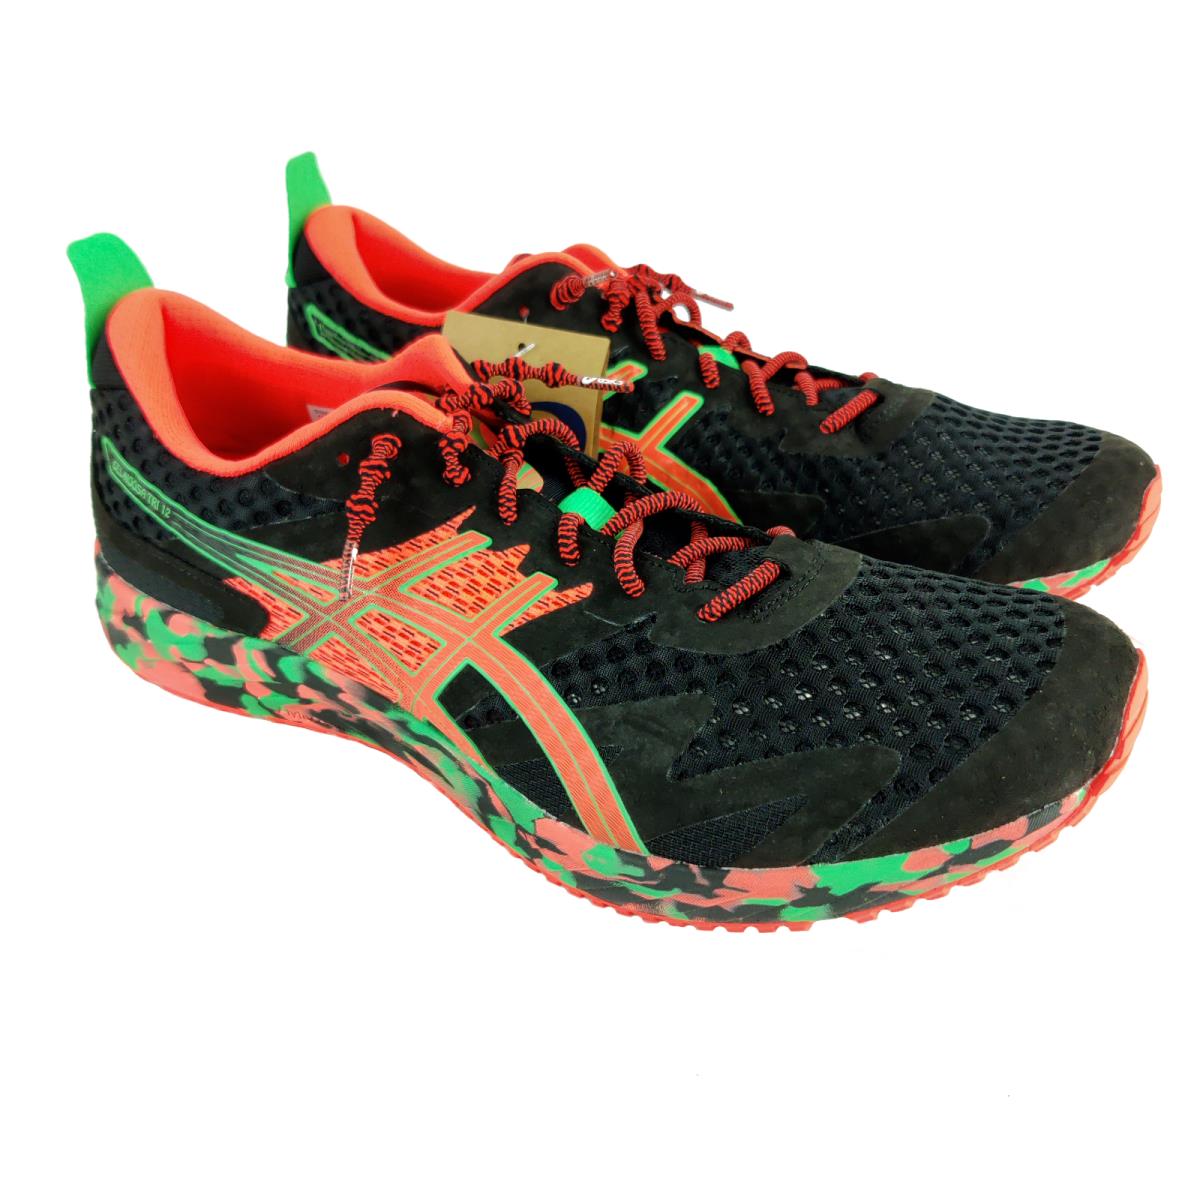 Asics Gel-noosa Tri 12 Running Shoes Black Pink Flash Coral Mens Size 11.5 - Black